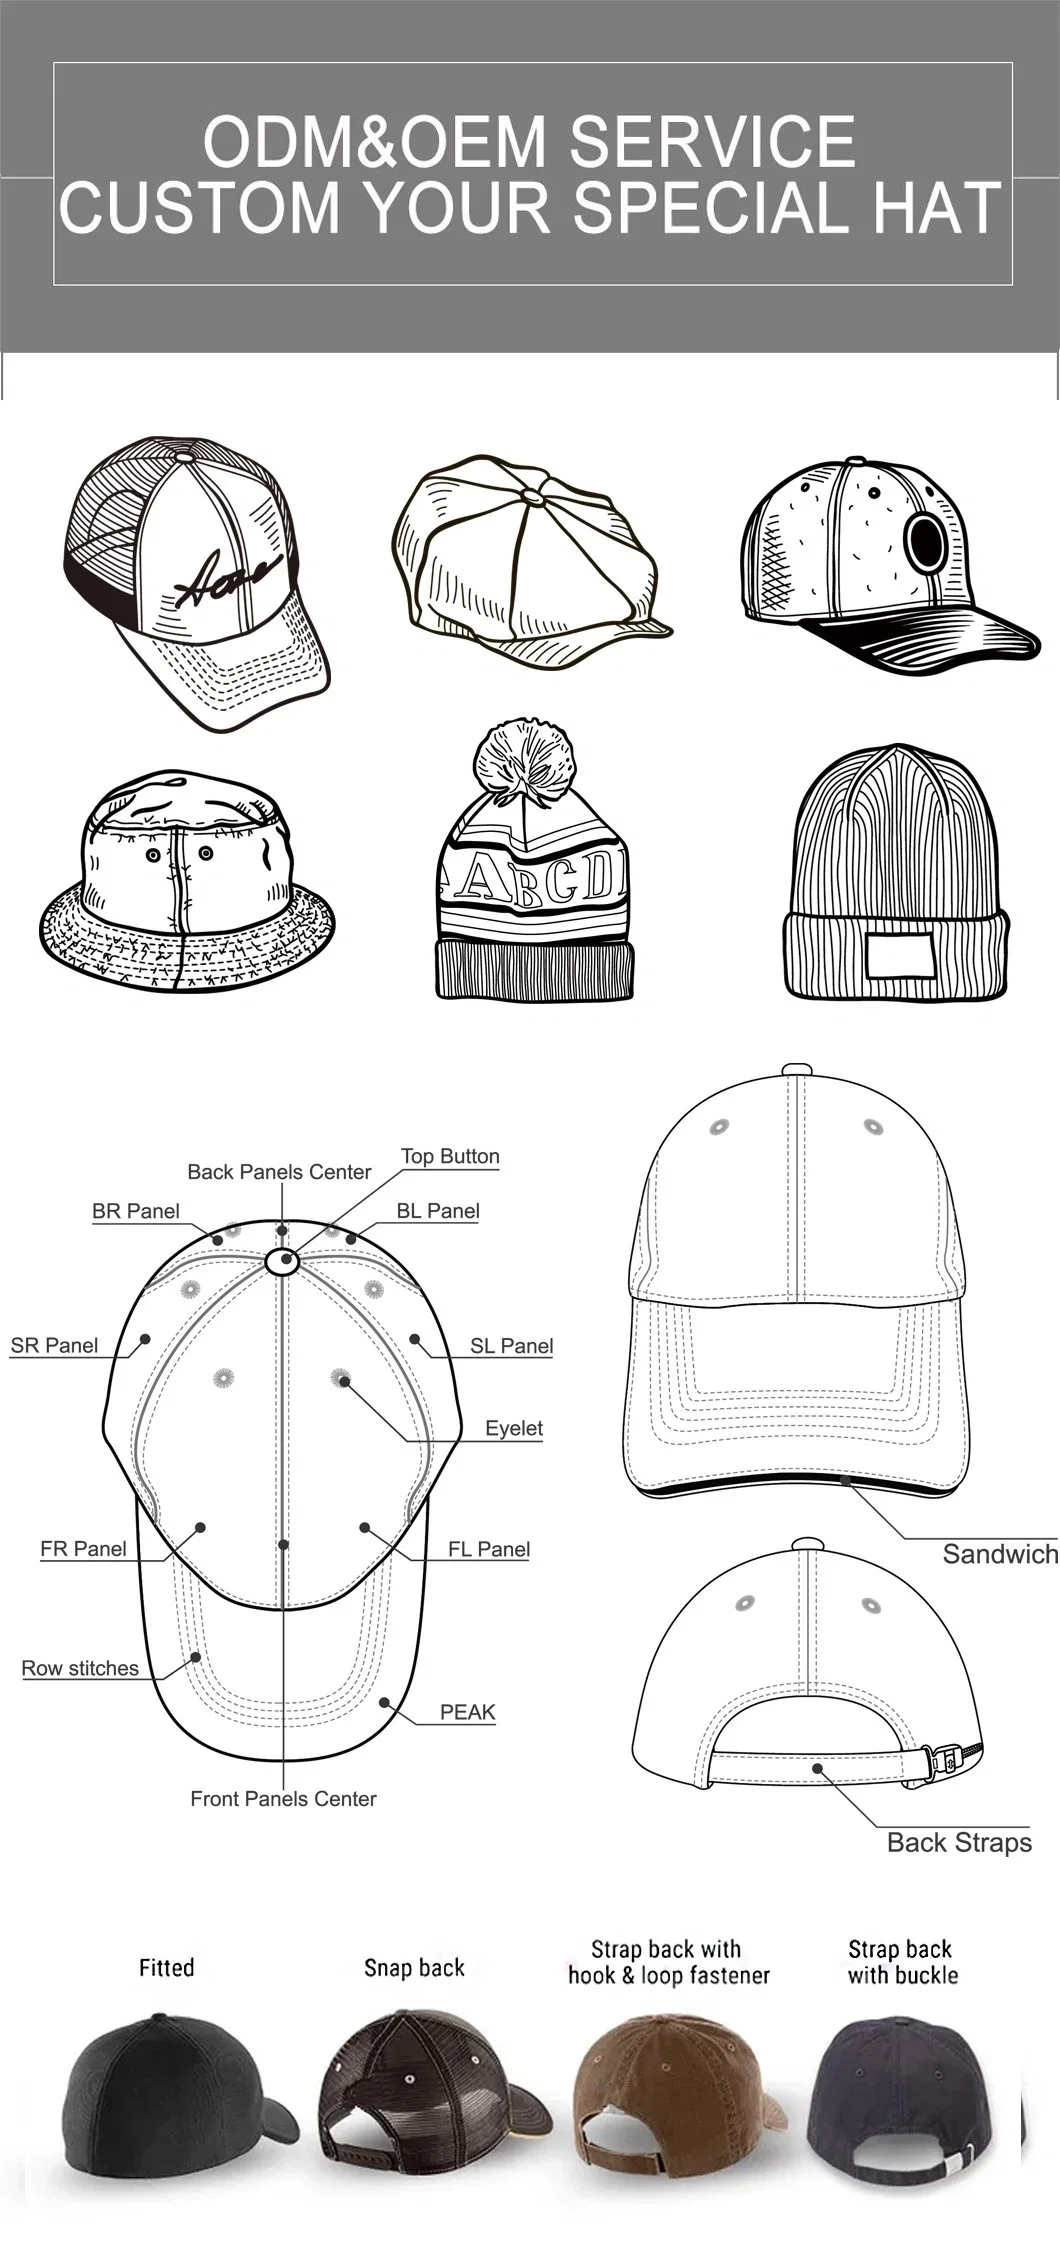 Custom New Design Kid Reversible Seersucker Bucket Baby Sun Hat with Chin Strap UV Protection